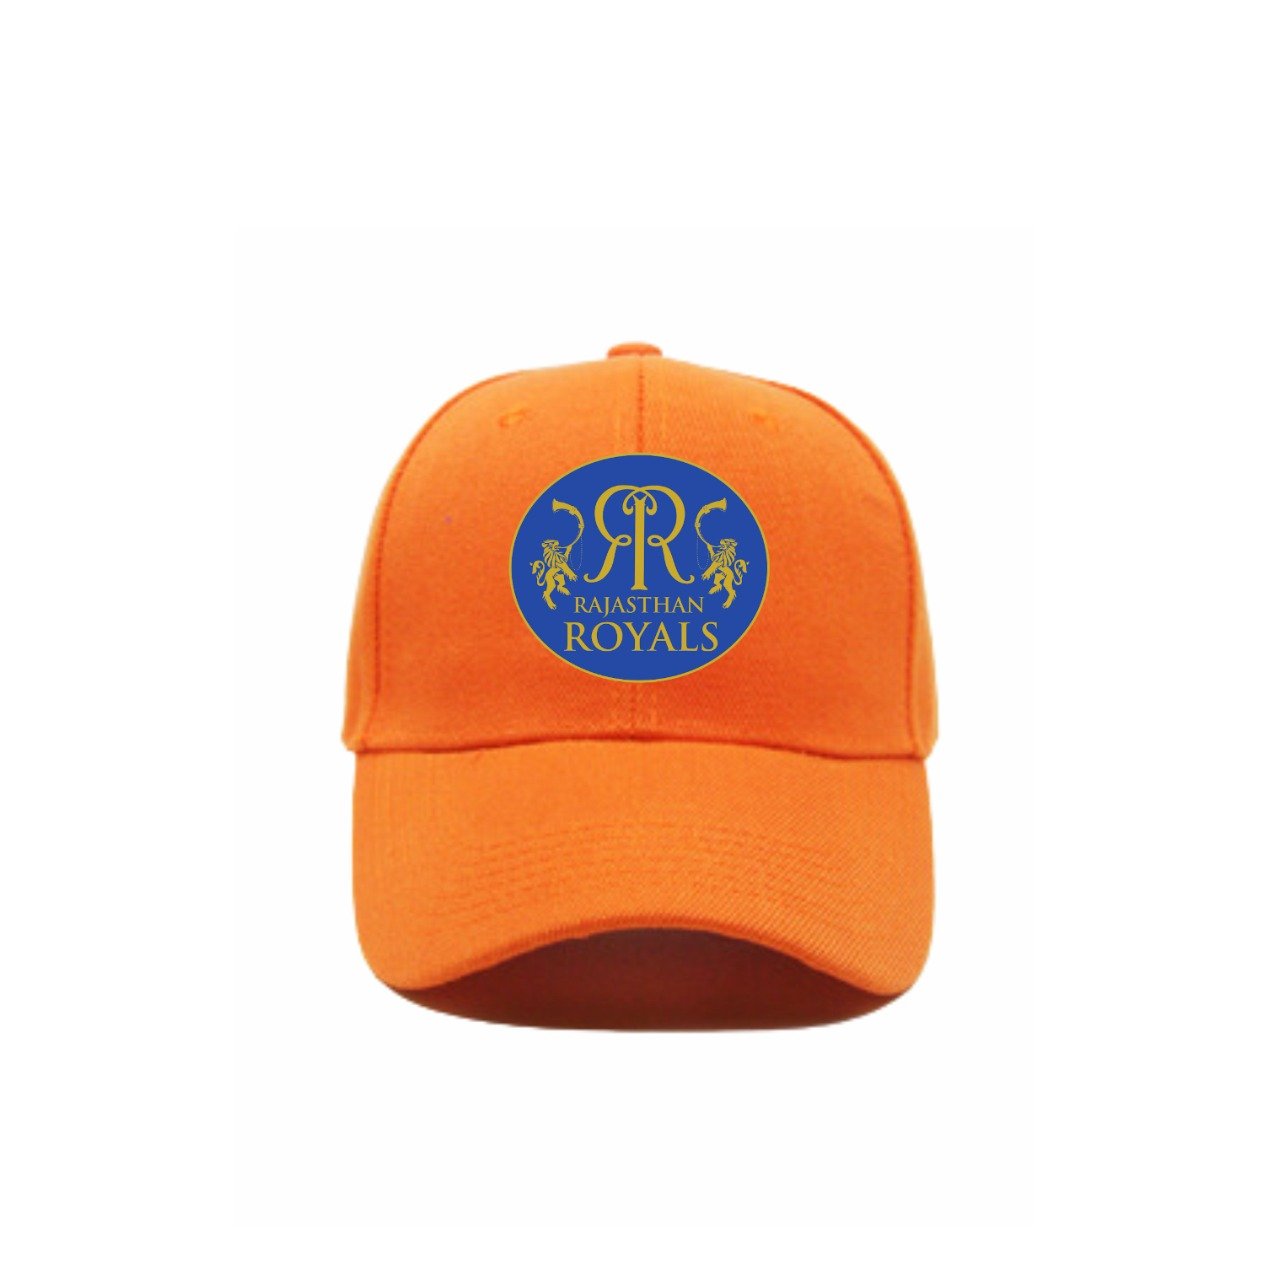 Rajasthan Royals IPL Cap Printed Orange